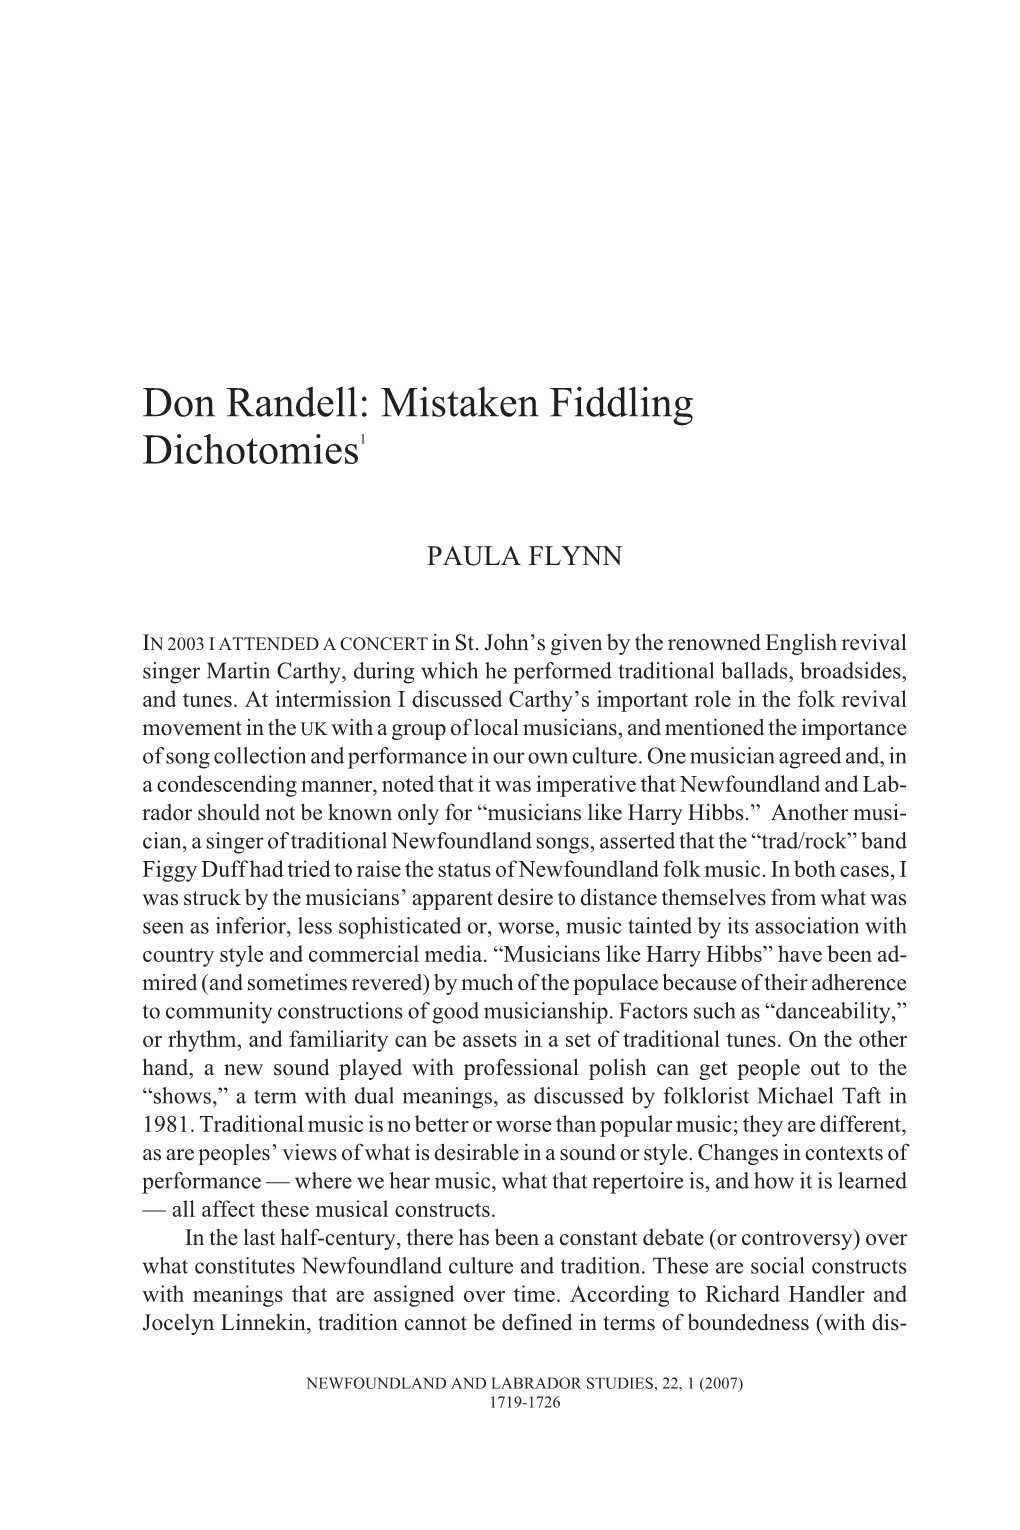 Don Randell: Mistaken Fiddling Dichotomies1